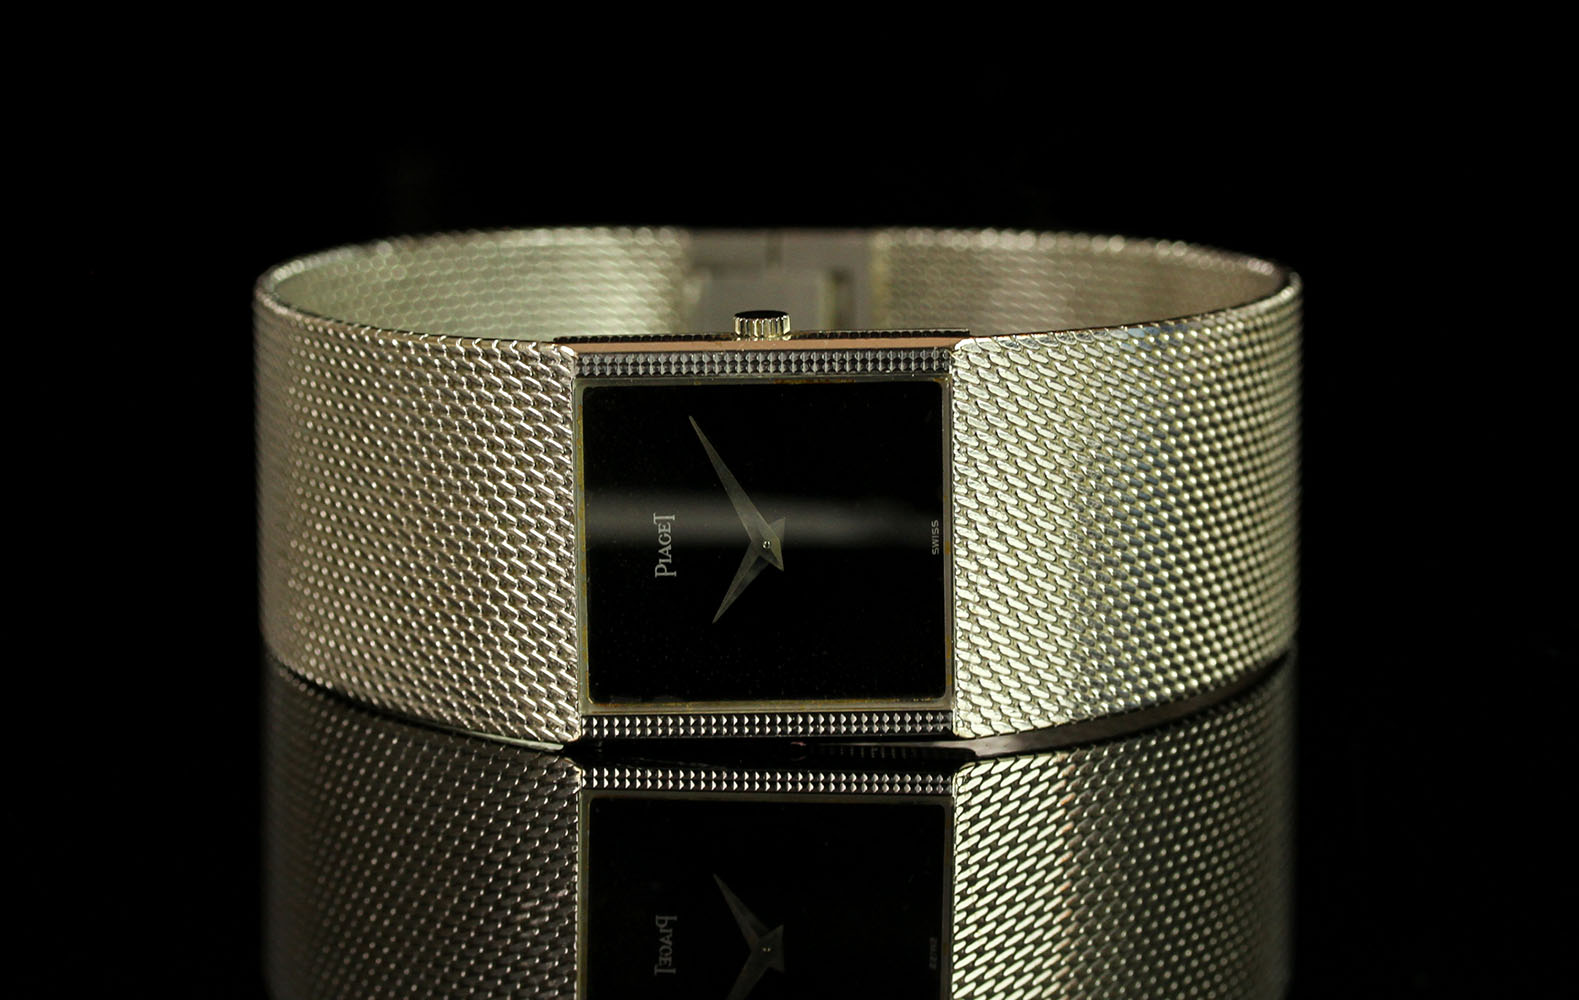 PIAGET DRESS WATCH W/BOX, rectangular black dial, 23mm case, manual wind movement inside, 18k - Image 2 of 3